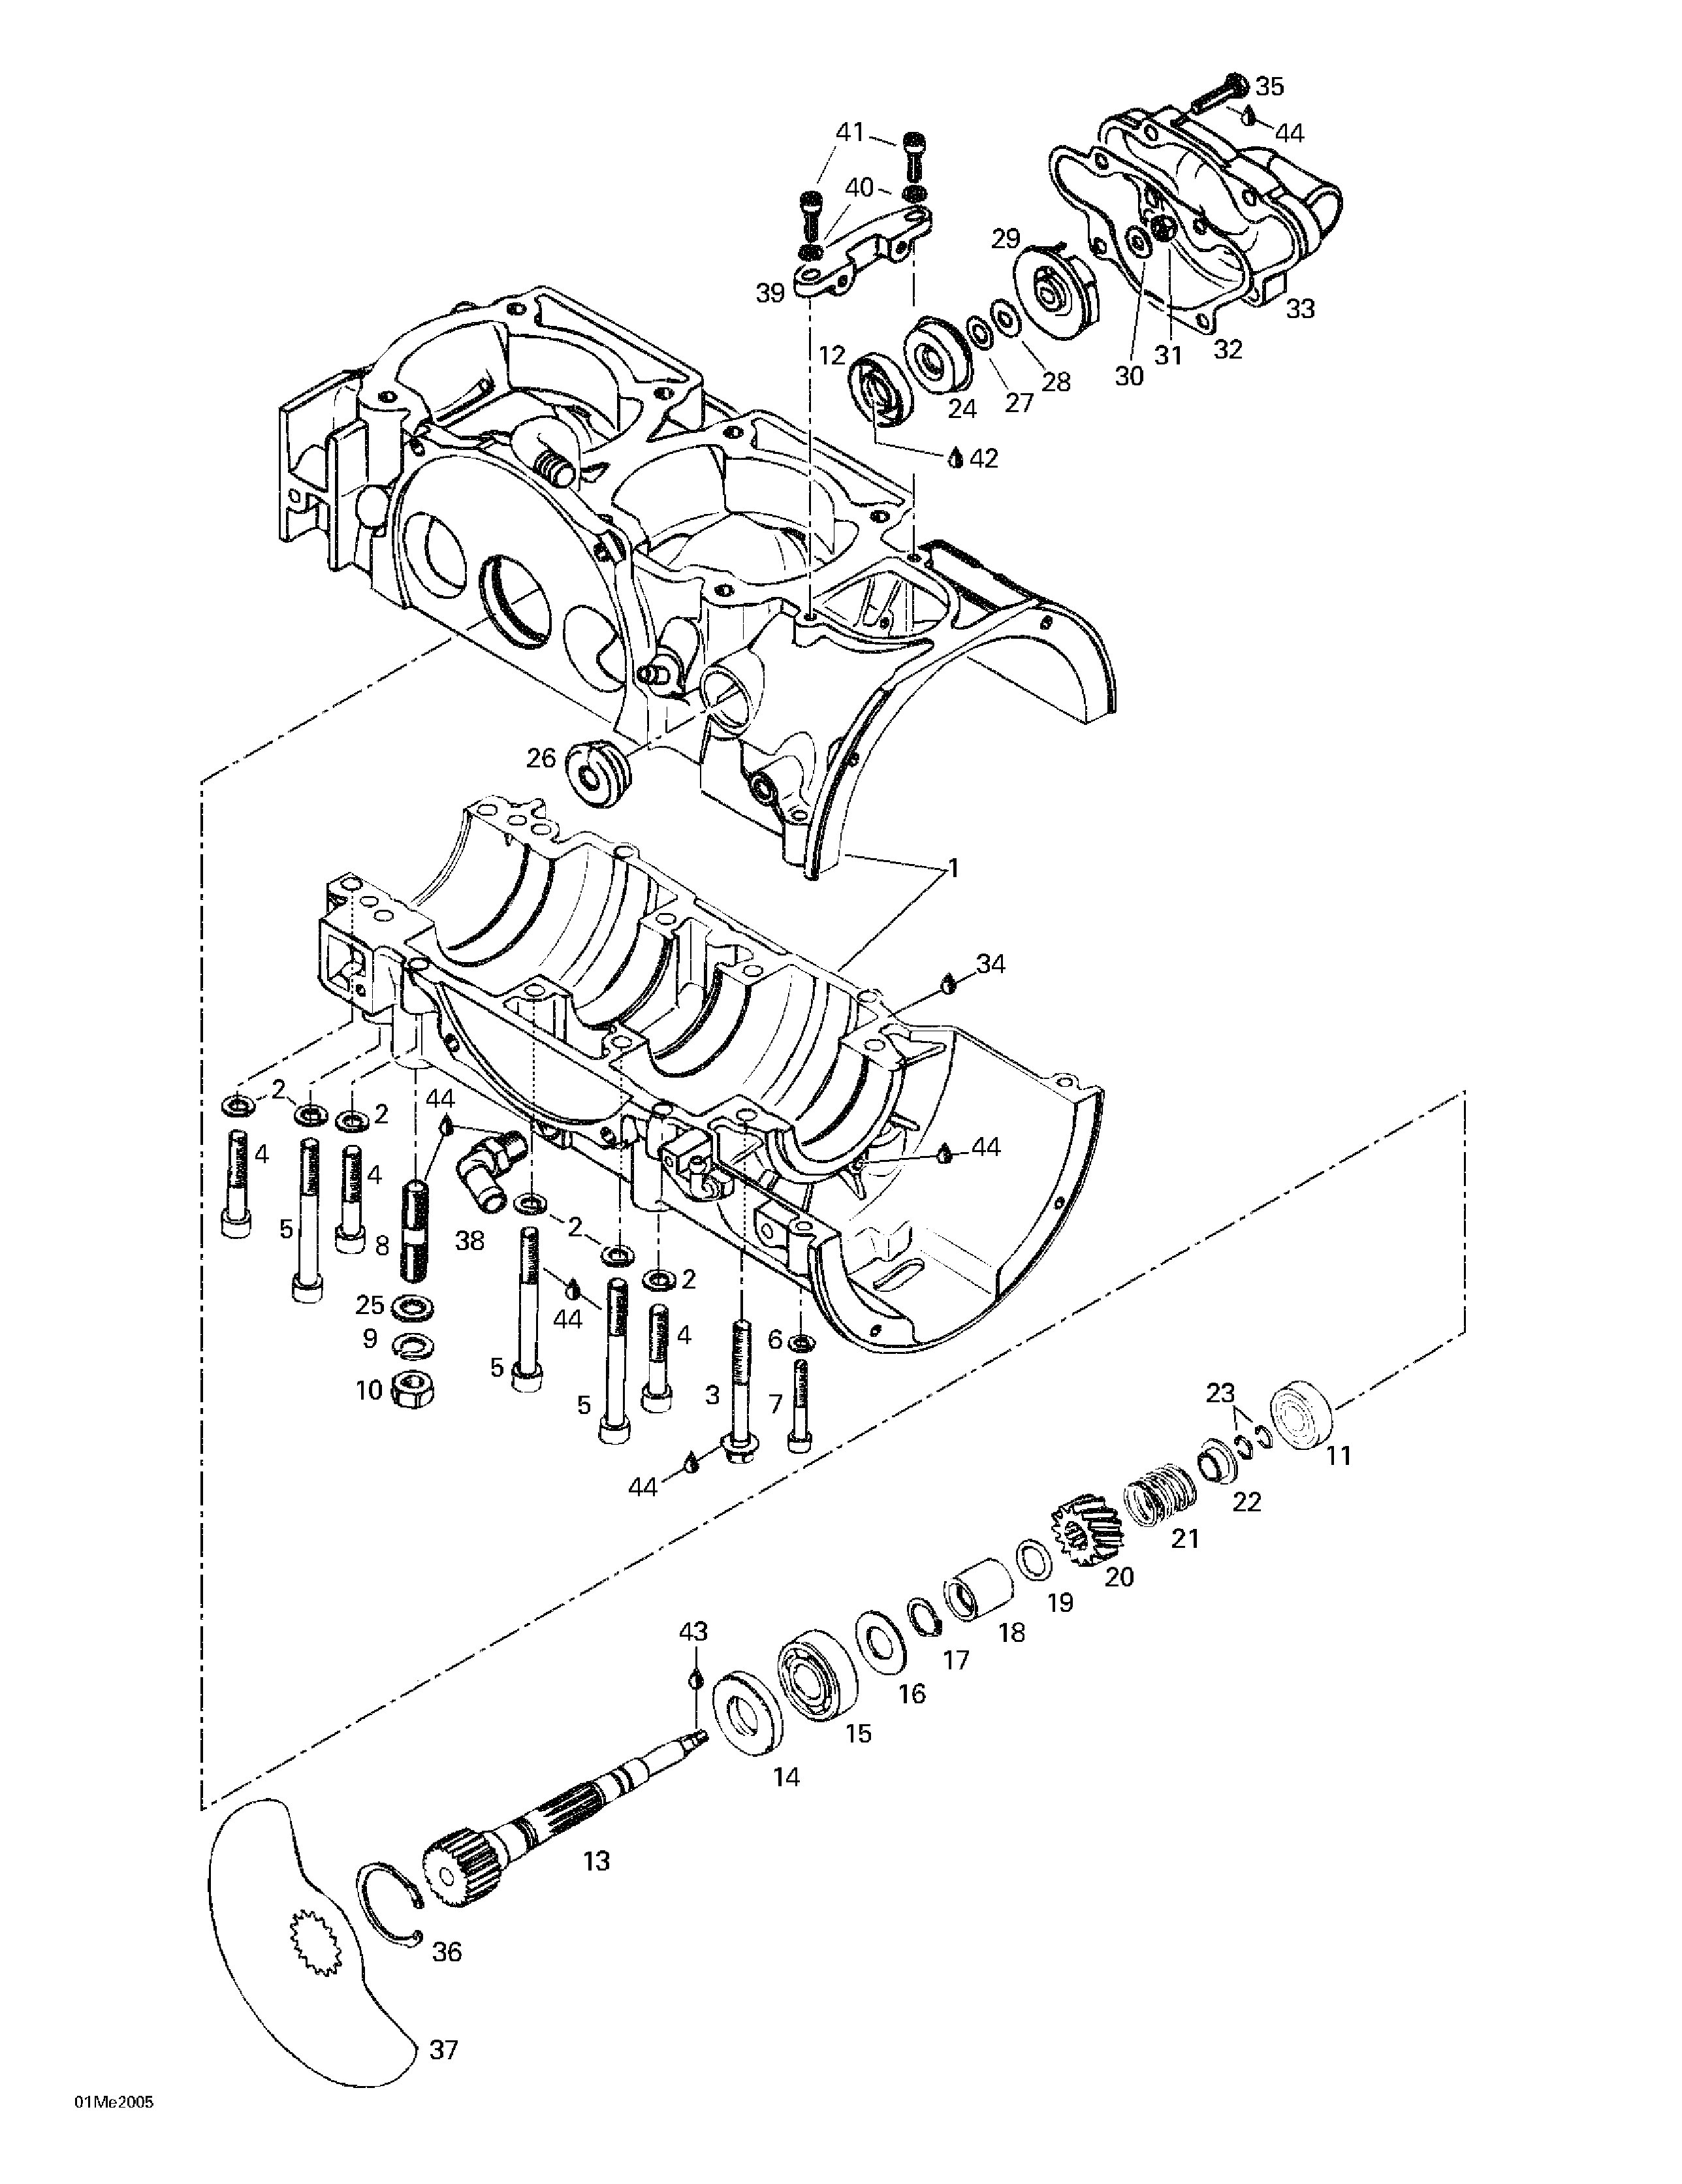 Crankcase, rotary valve, water pump